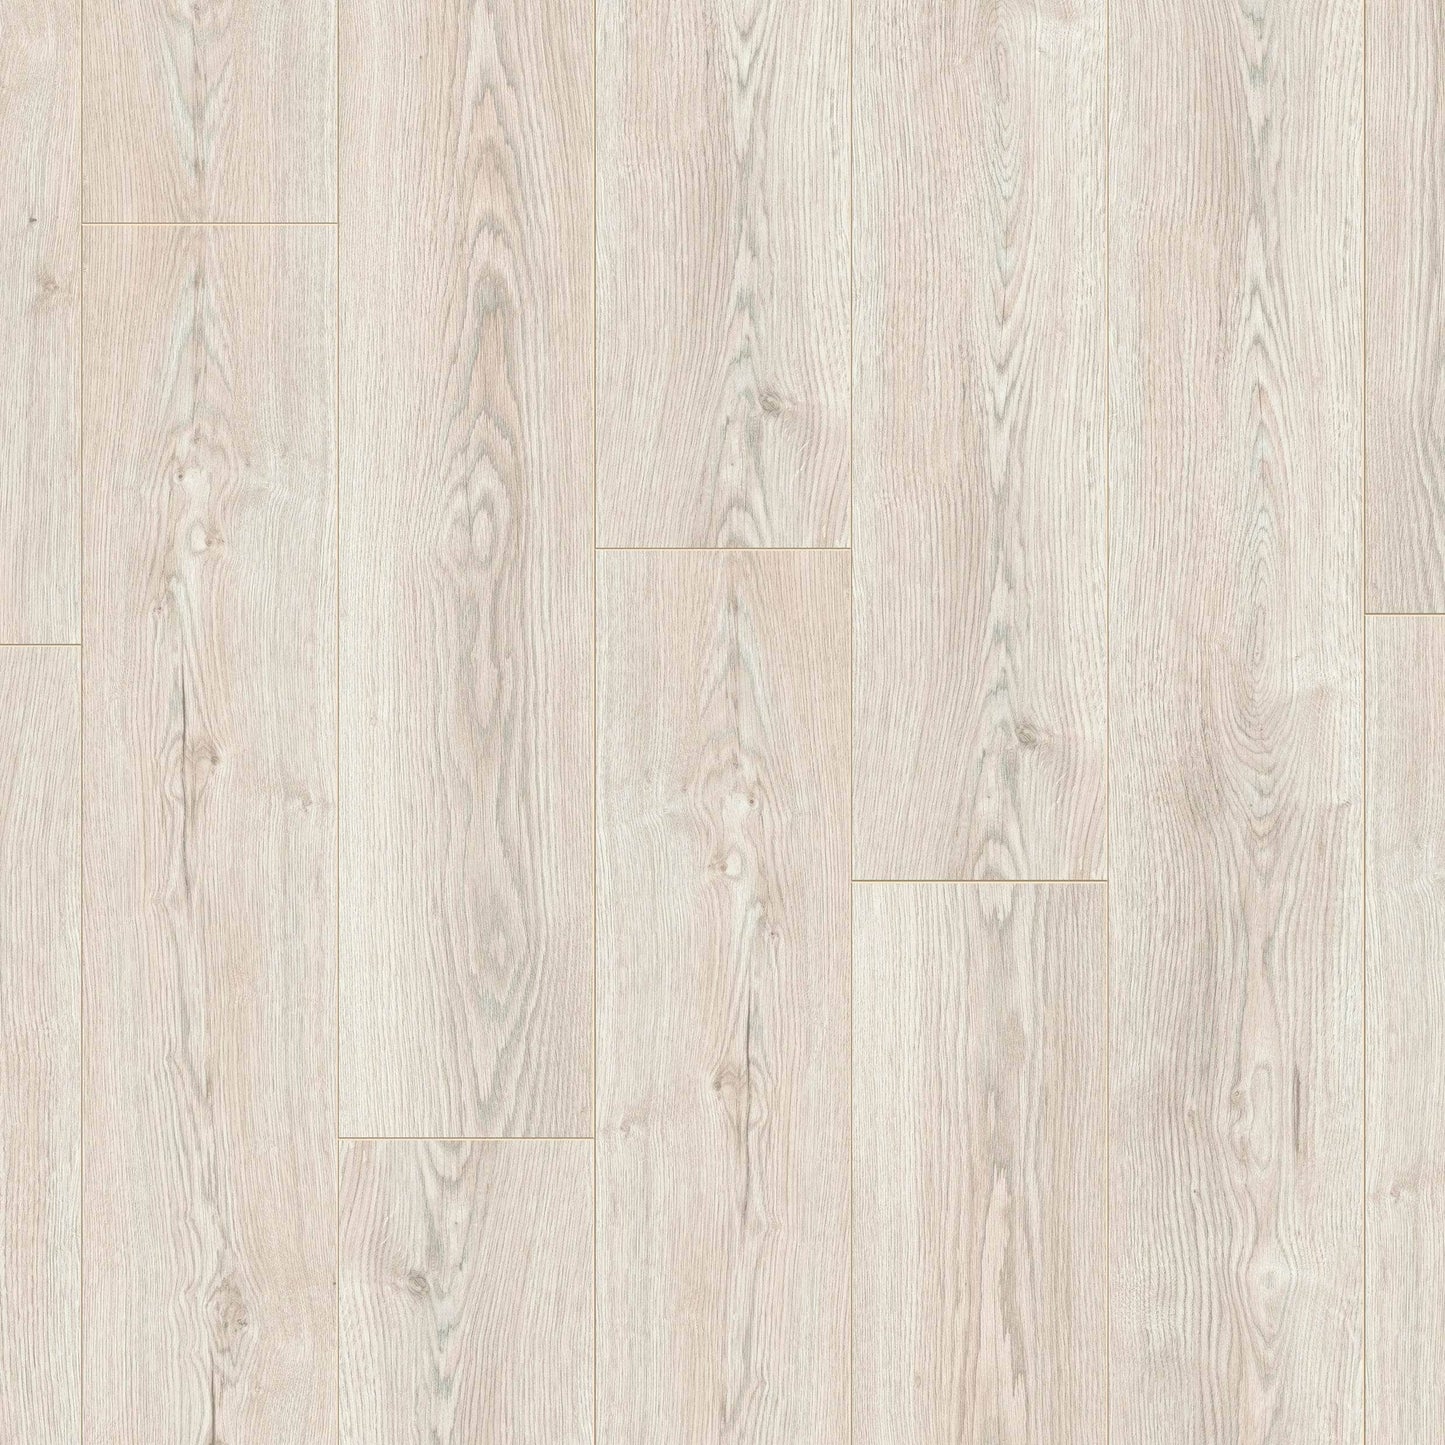 Flooring & Carpet  -  Krono Supernatural Misty Sterling Oak 8mm Laminate Flooring (2.22m² Pack)  -  60003738